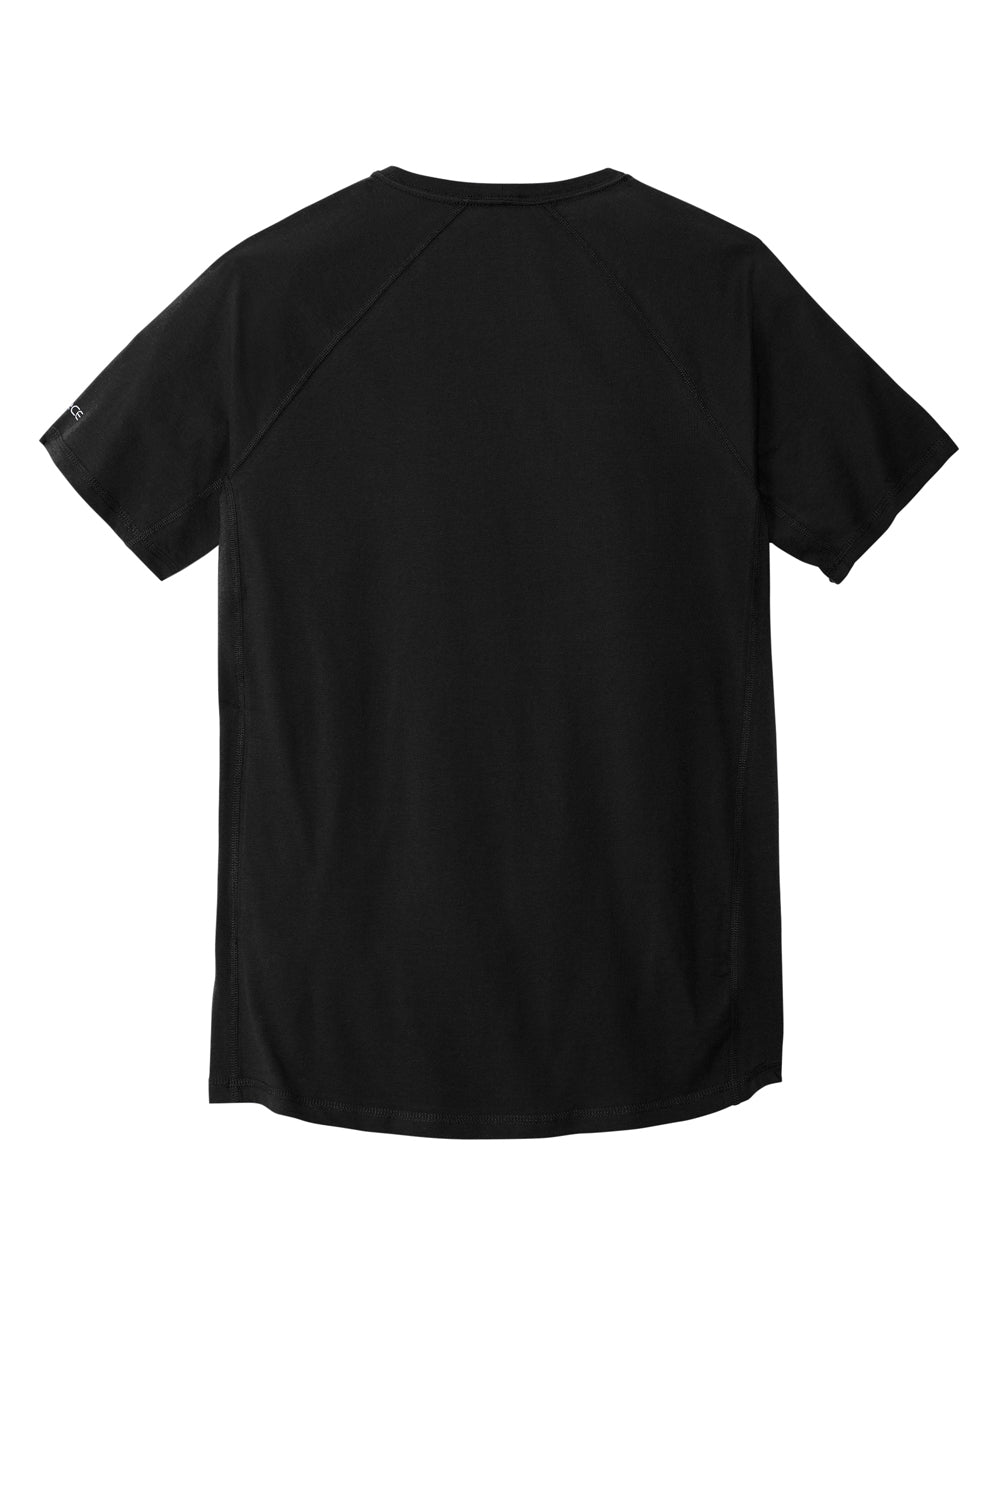 Carhartt CT104616 Mens Force Moisture Wicking Short Sleeve Crewneck T-Shirt w/ Pocket Black Flat Back